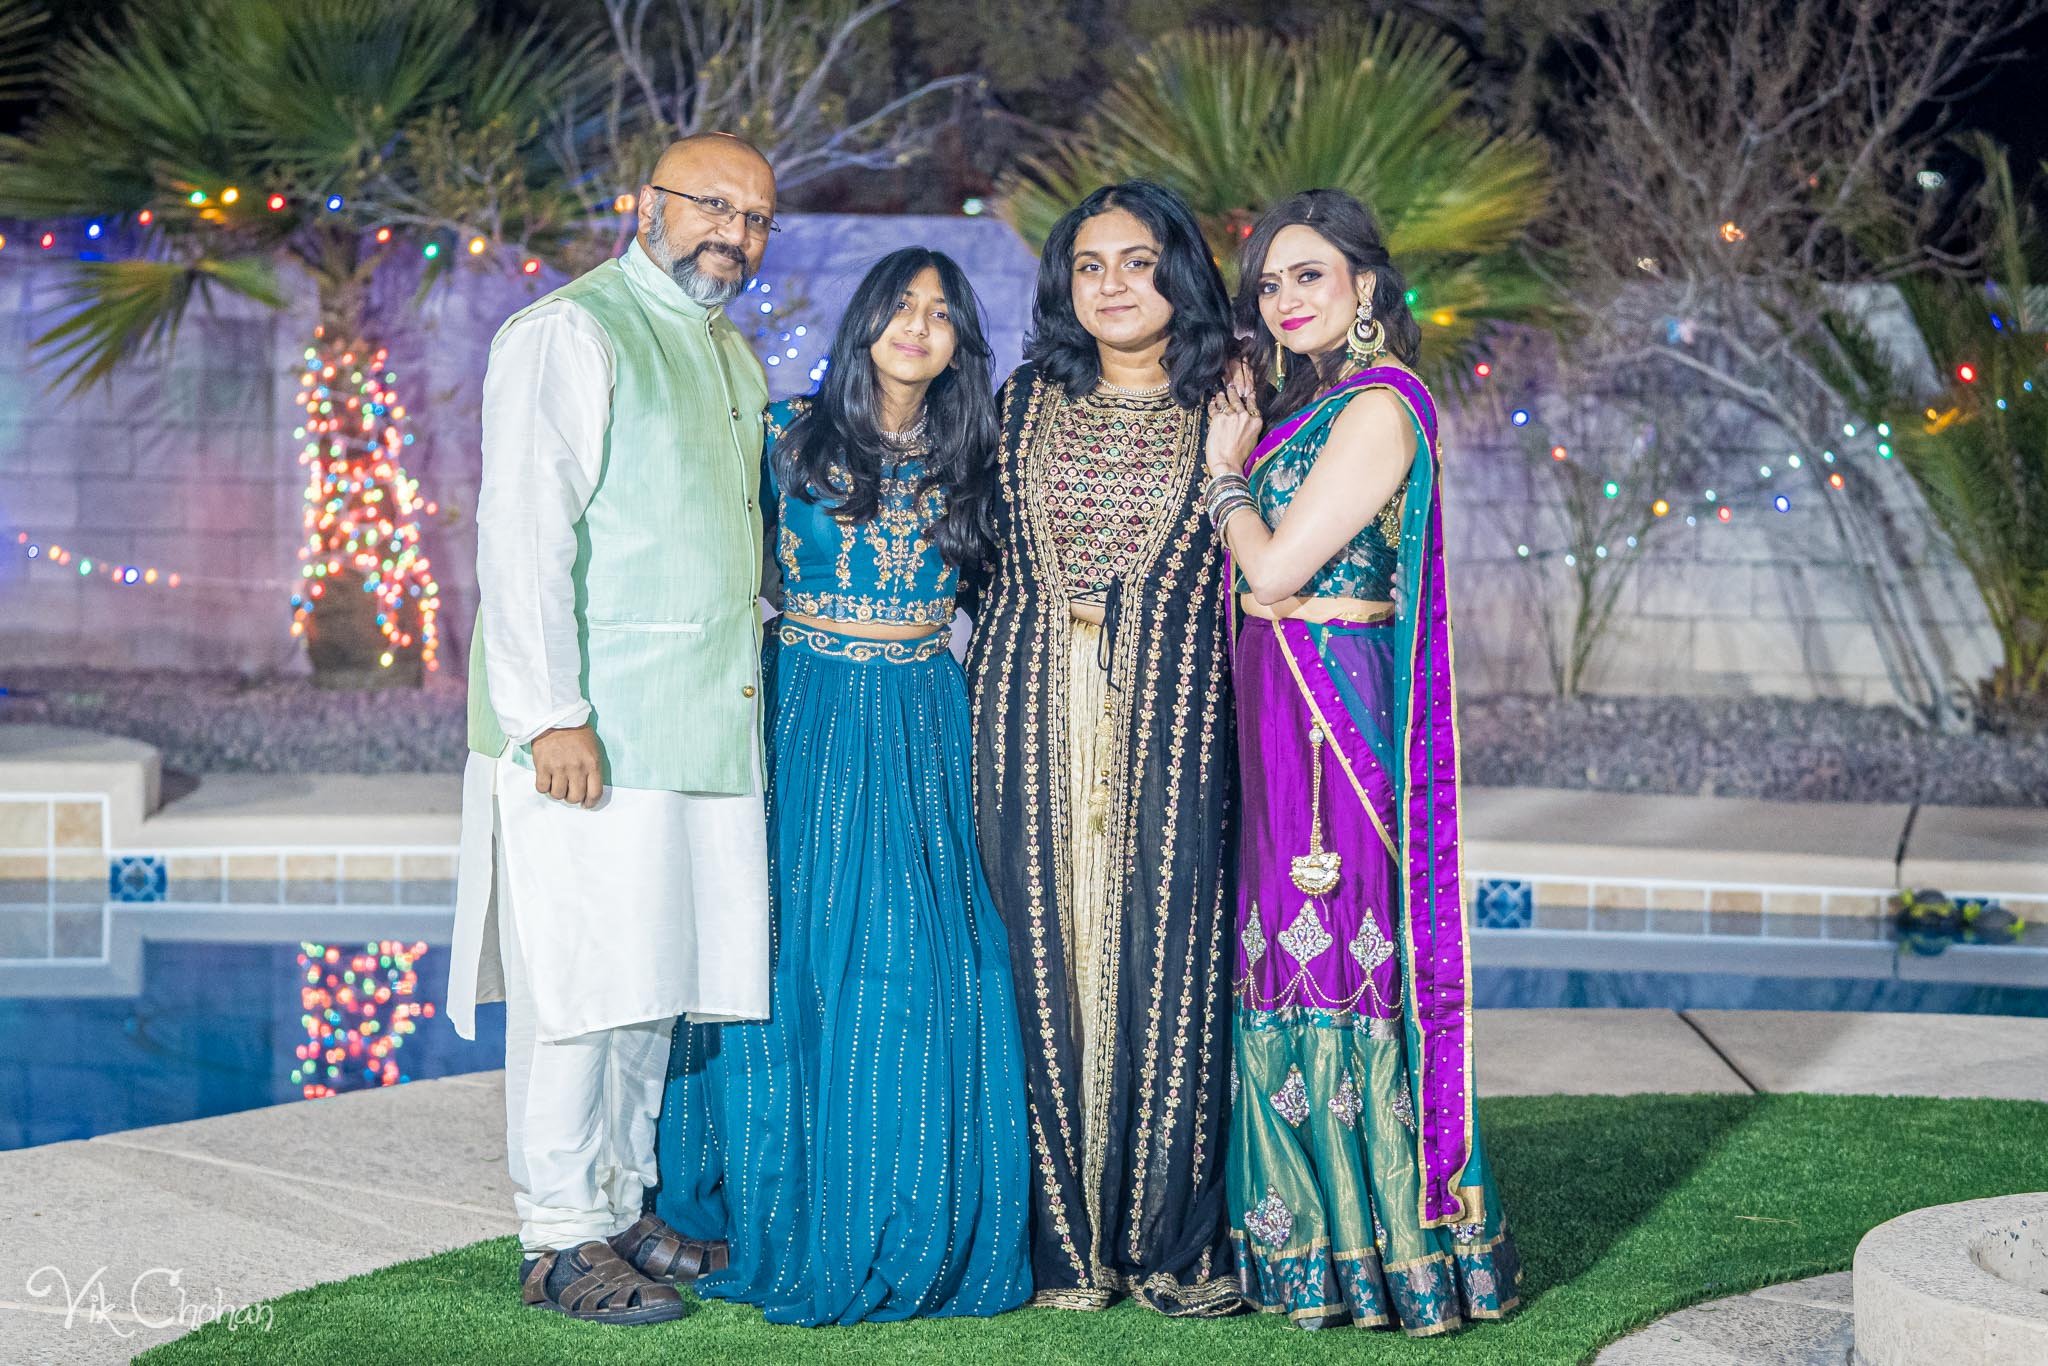 2022-02-04-Hely-&-Parth-Garba-Night-Indian-Wedding-Vik-Chohan-Photography-Photo-Booth-Social-Media-VCP-188.jpg